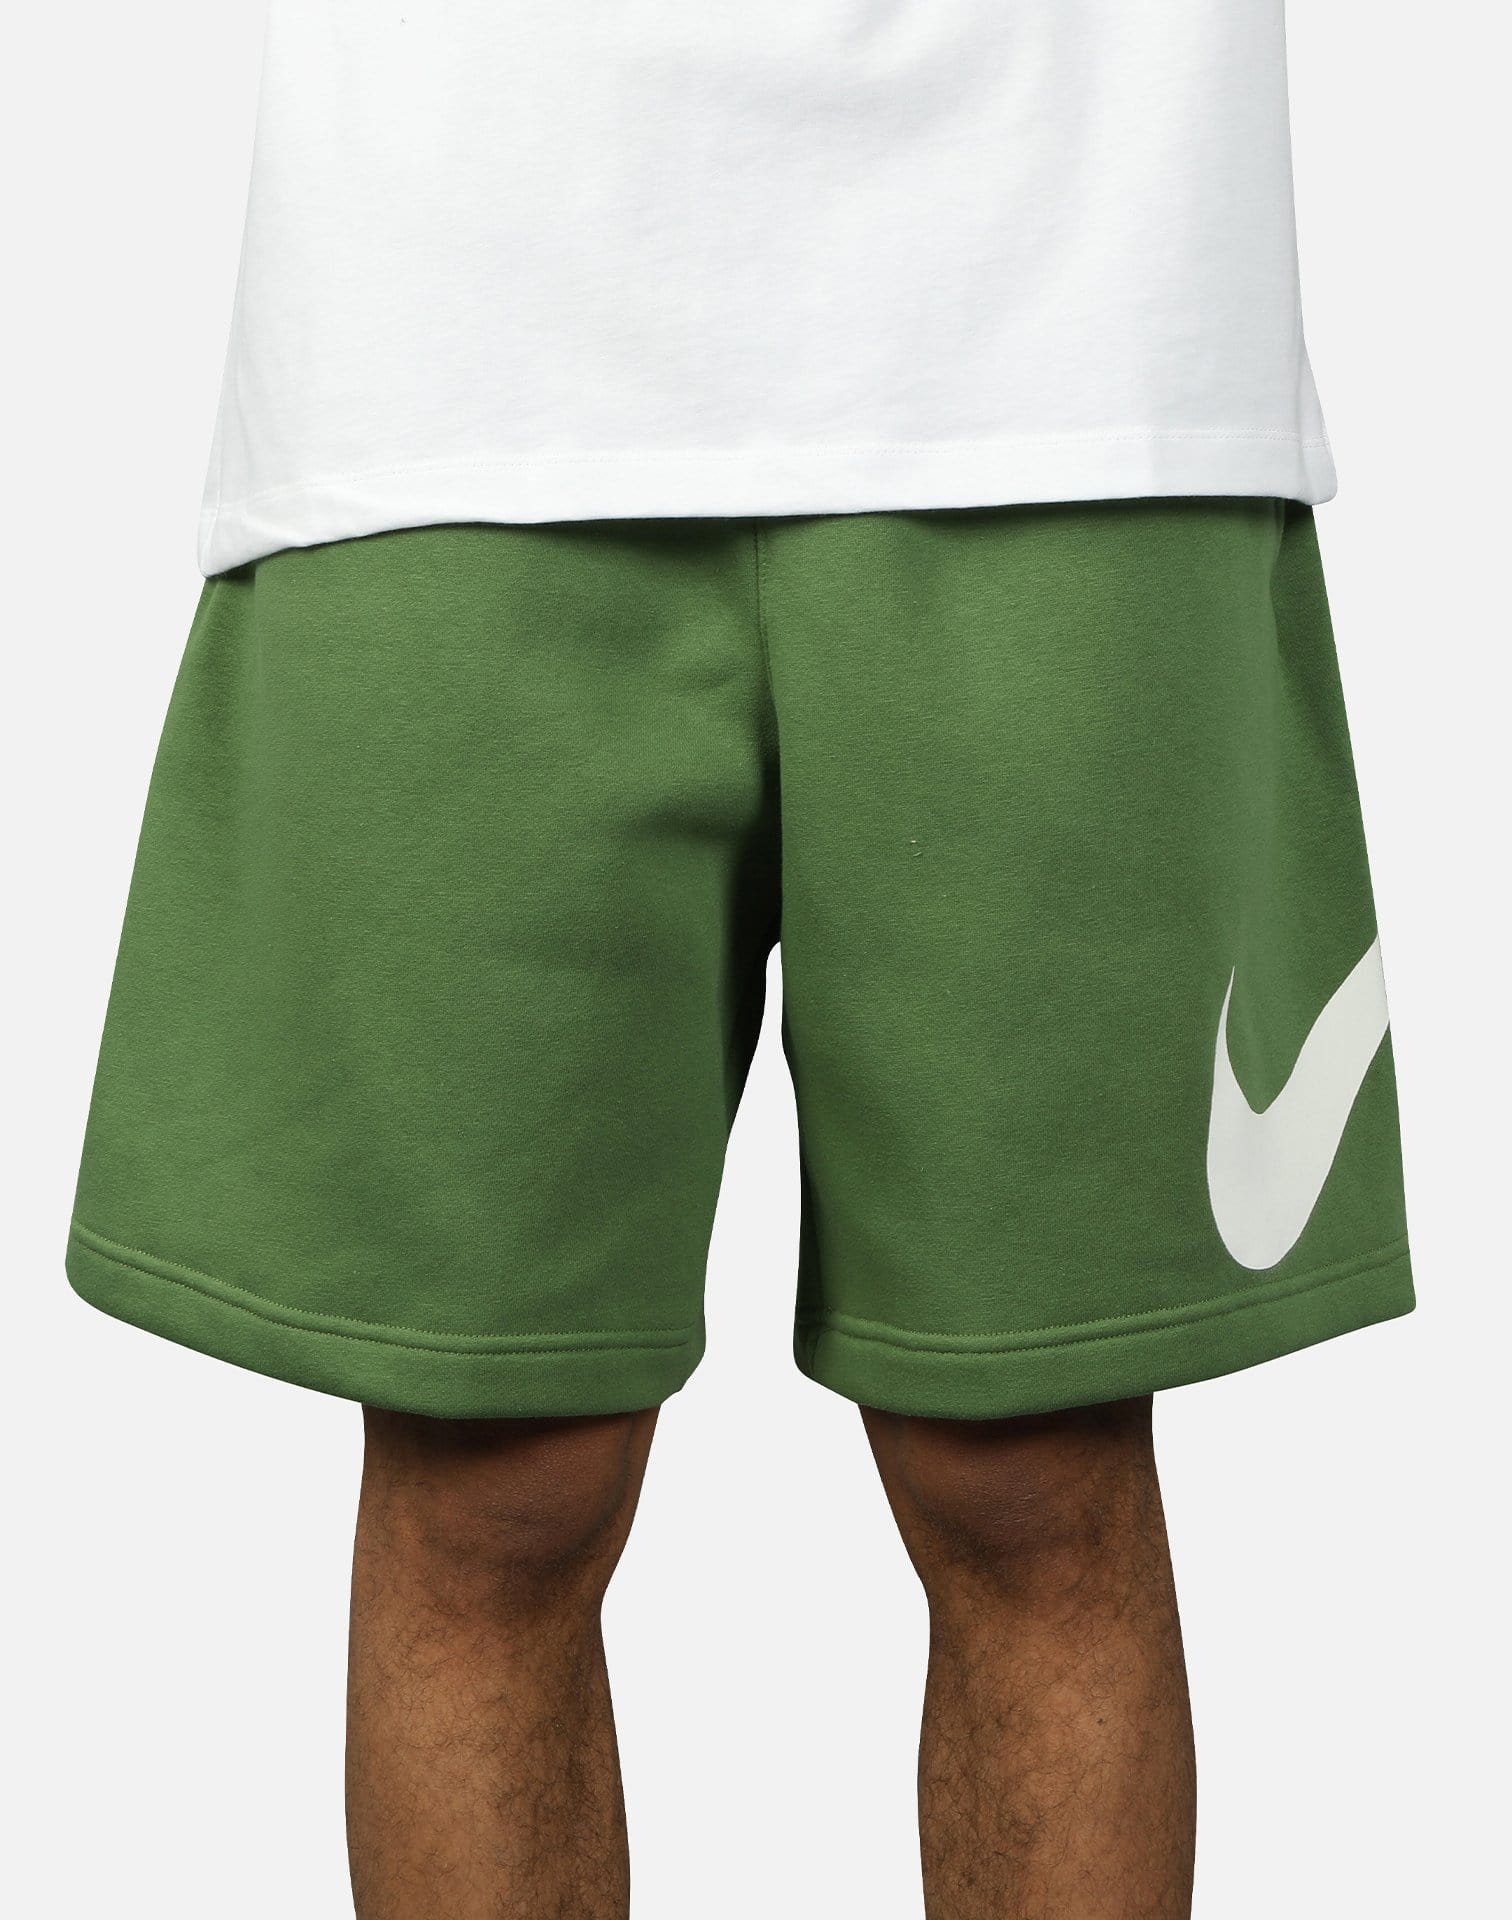 مهندس لعق متر nike club shorts green 